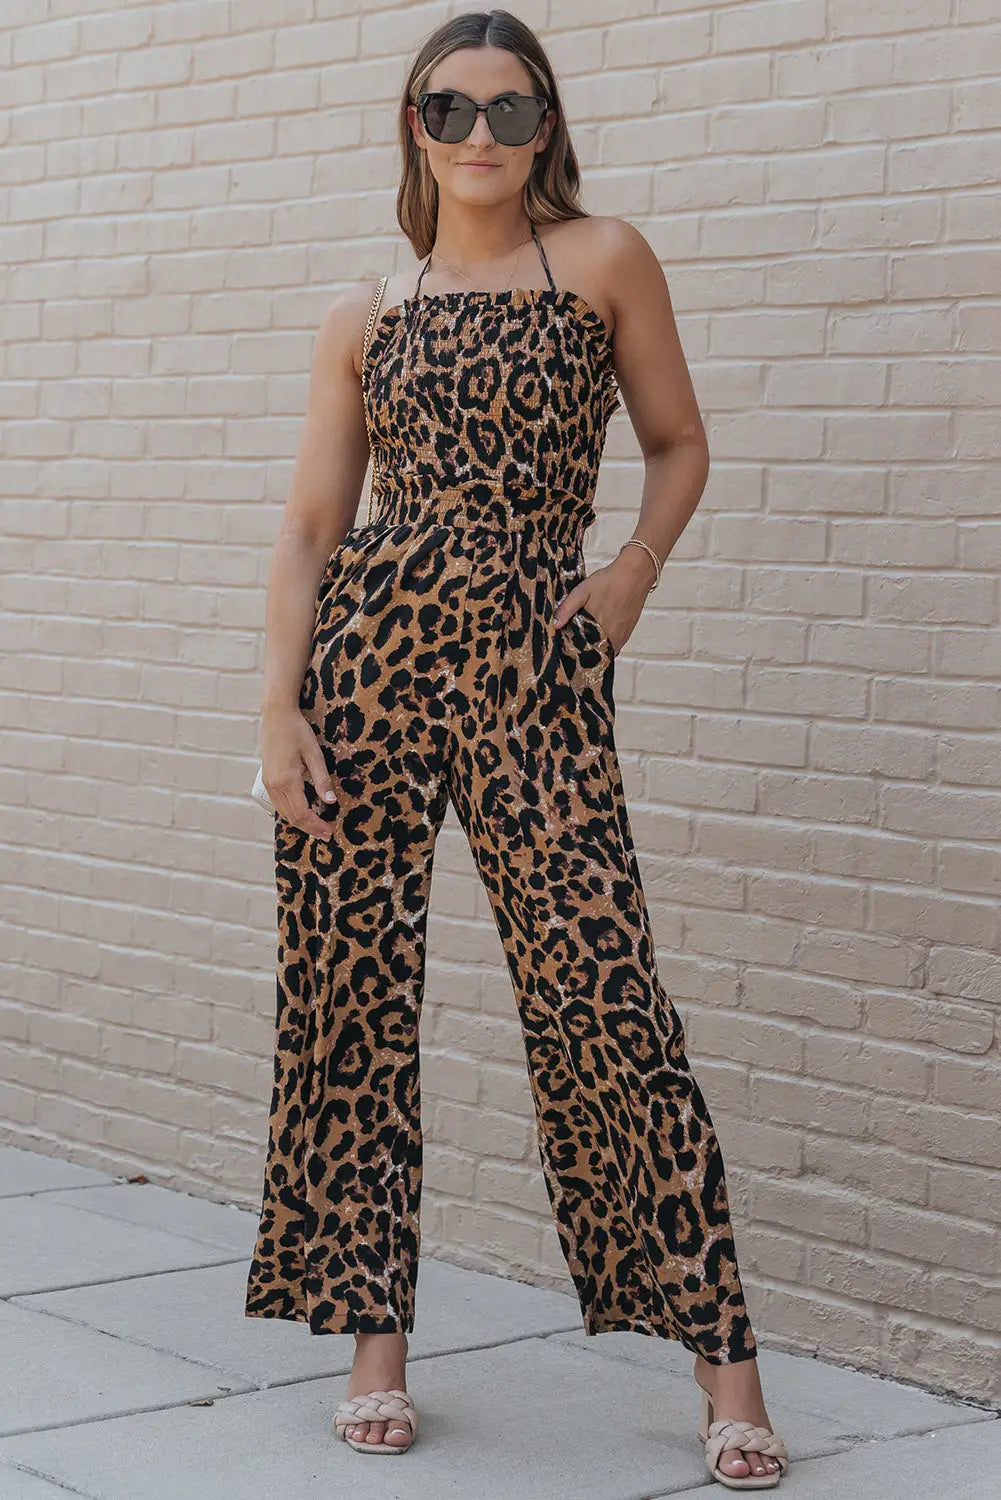 Leopard print halter neck backless wide leg jumpsuit - s / 100% polyester - jumpsuits & rompers